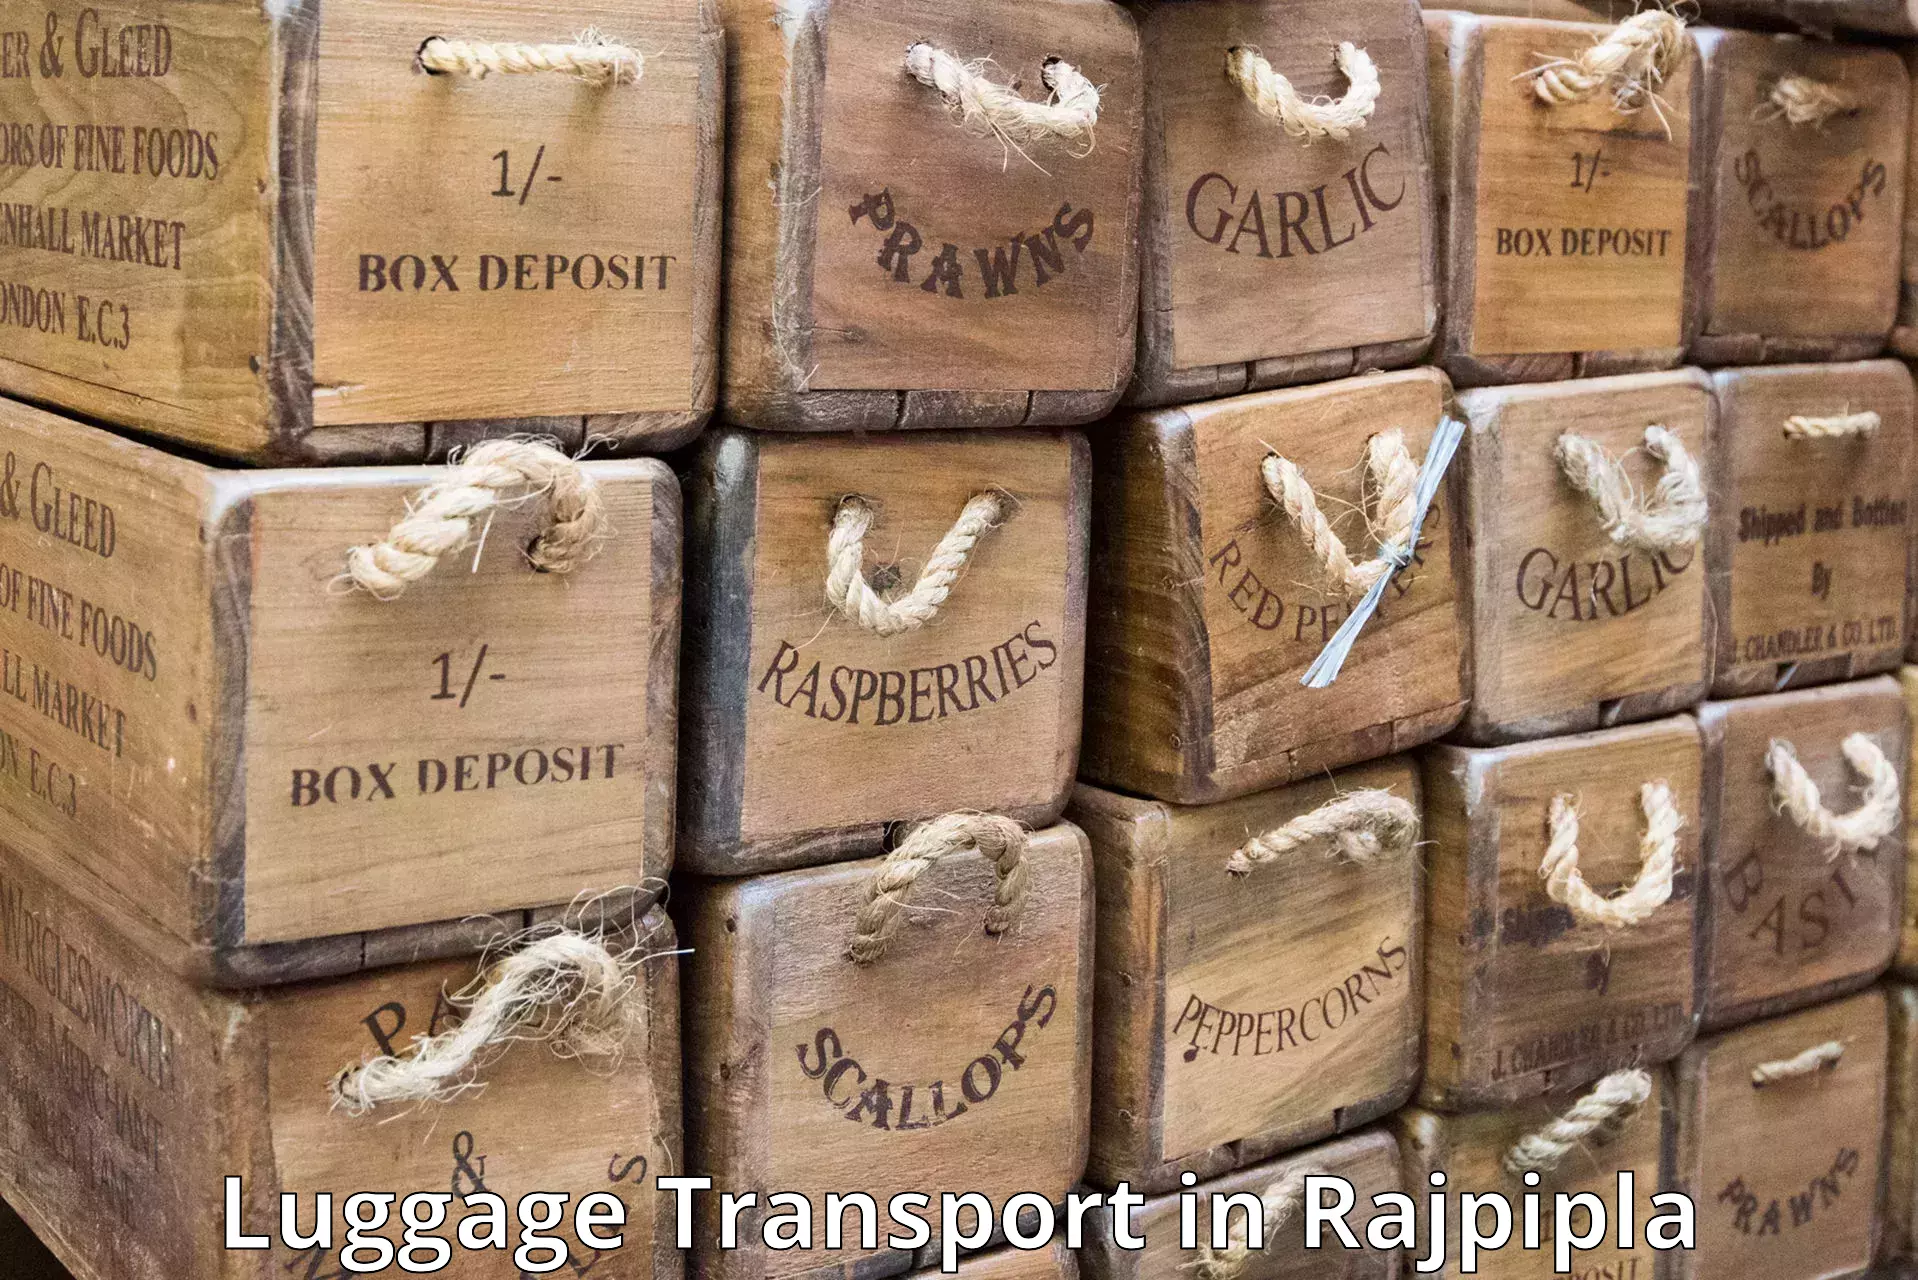 Luggage shipment processing in Rajpipla